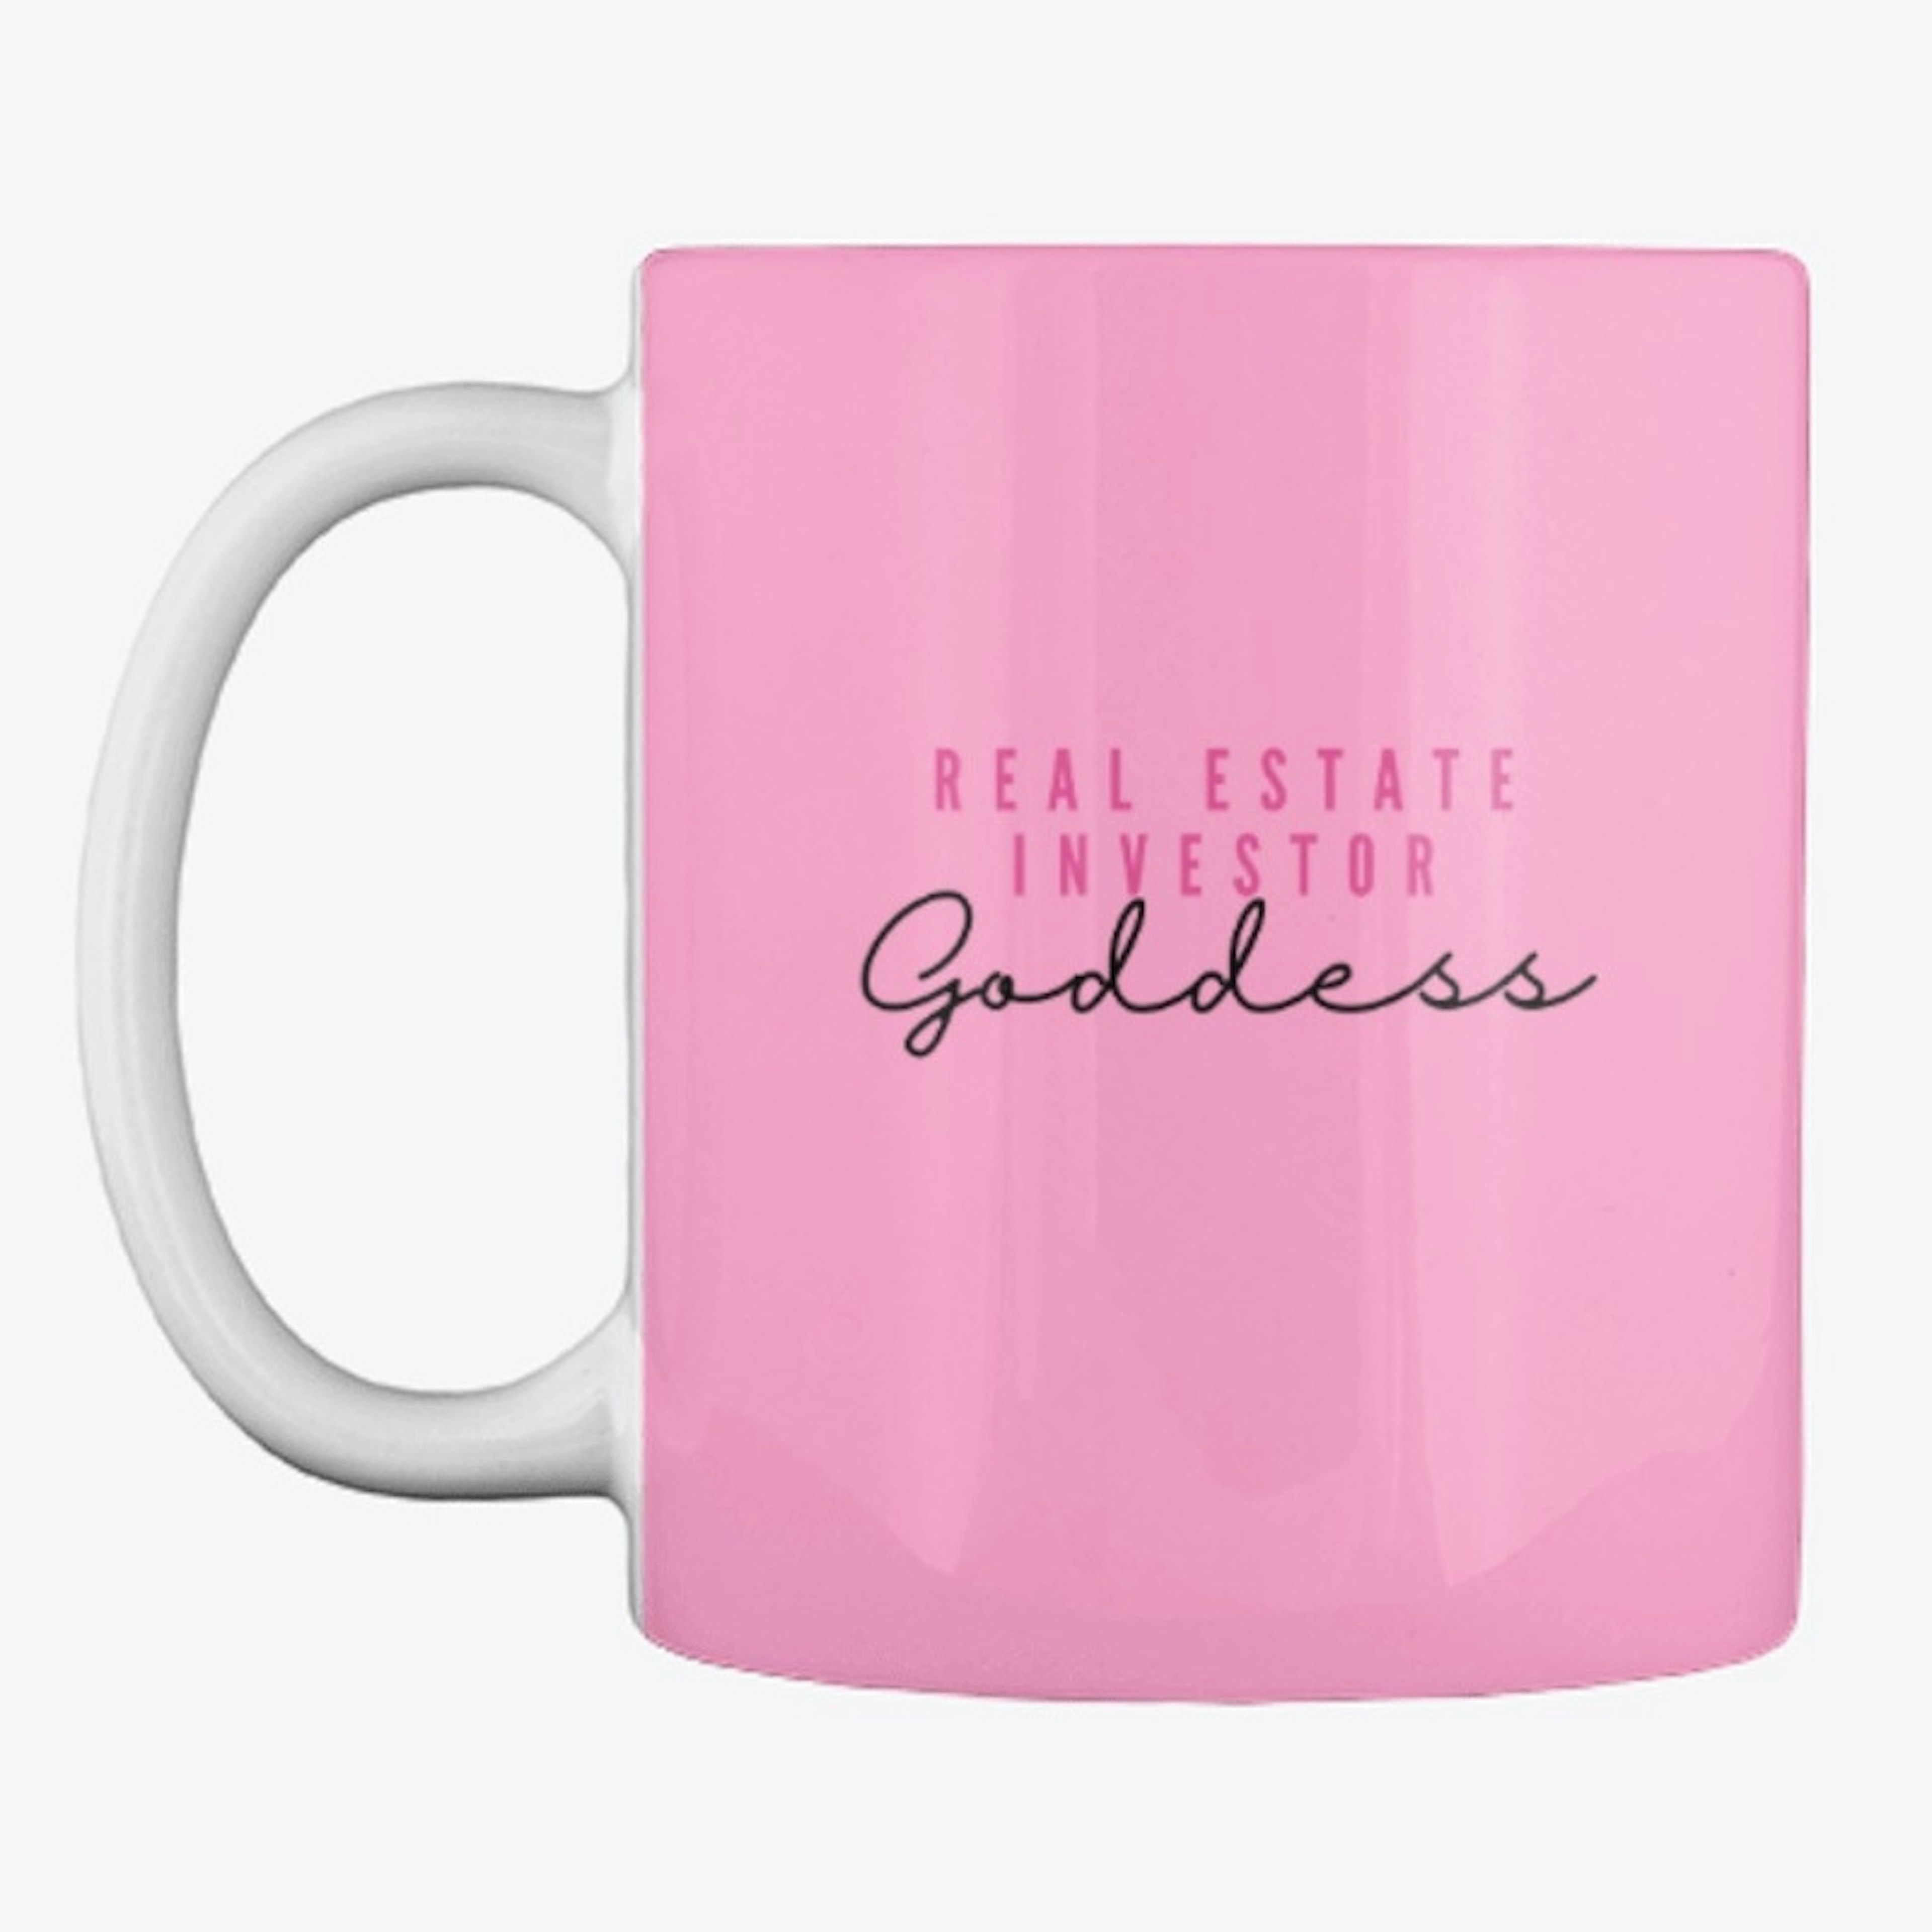 Real Estate Investor Goddesses